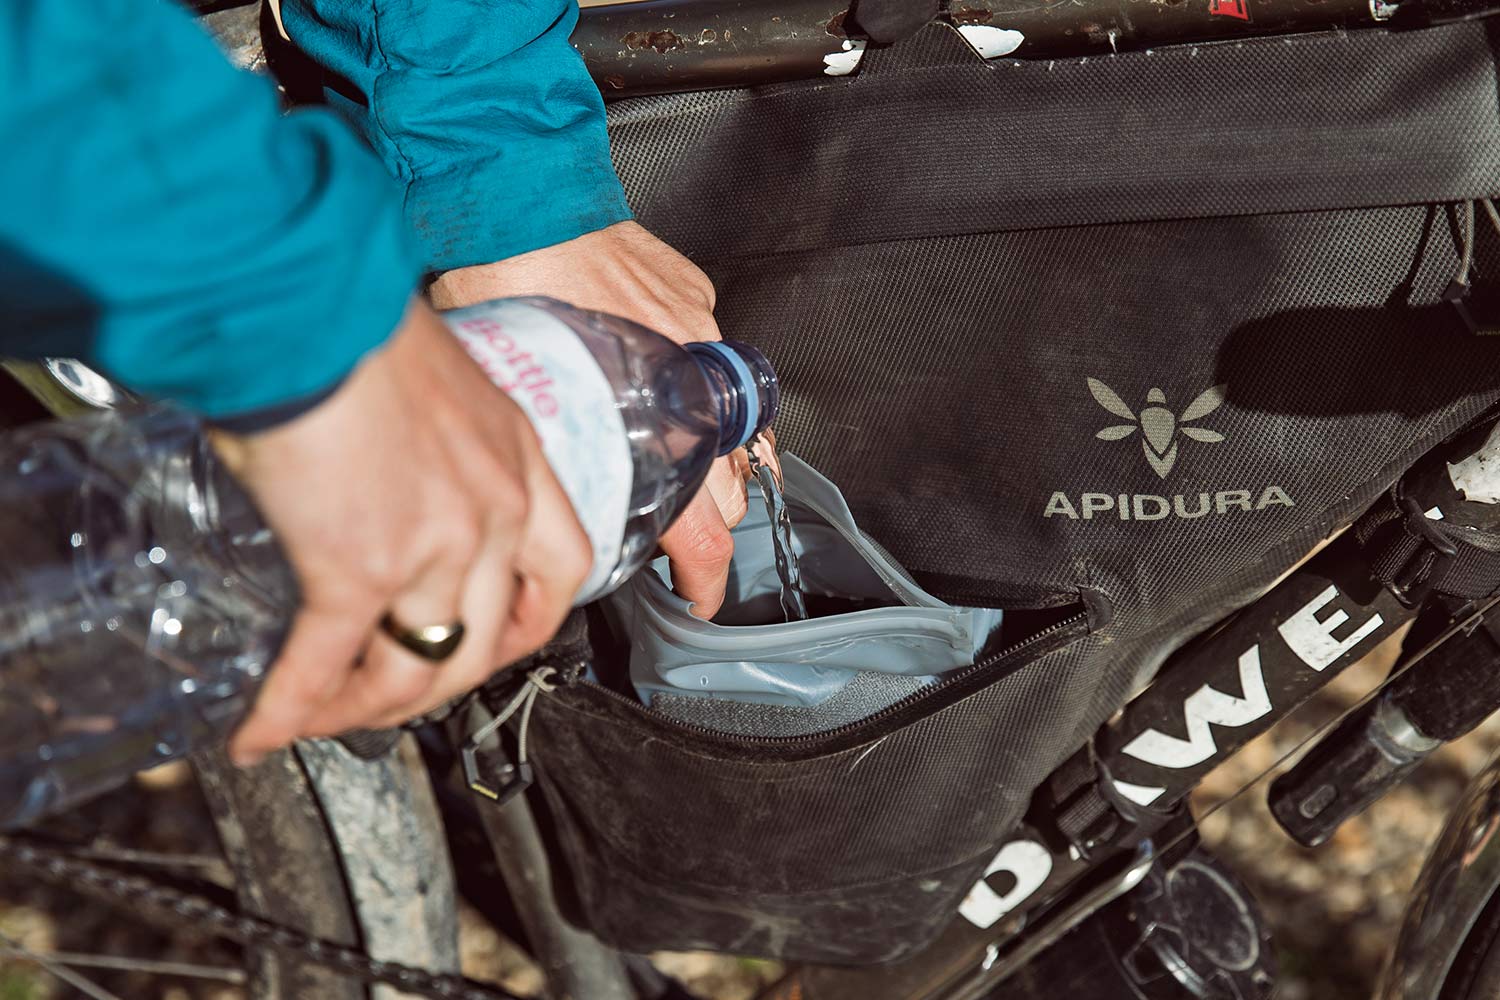 Apidura 1.5L frame Pack Hydration Bladder, Innovation Lab bikepacking frame pack water bag, refill